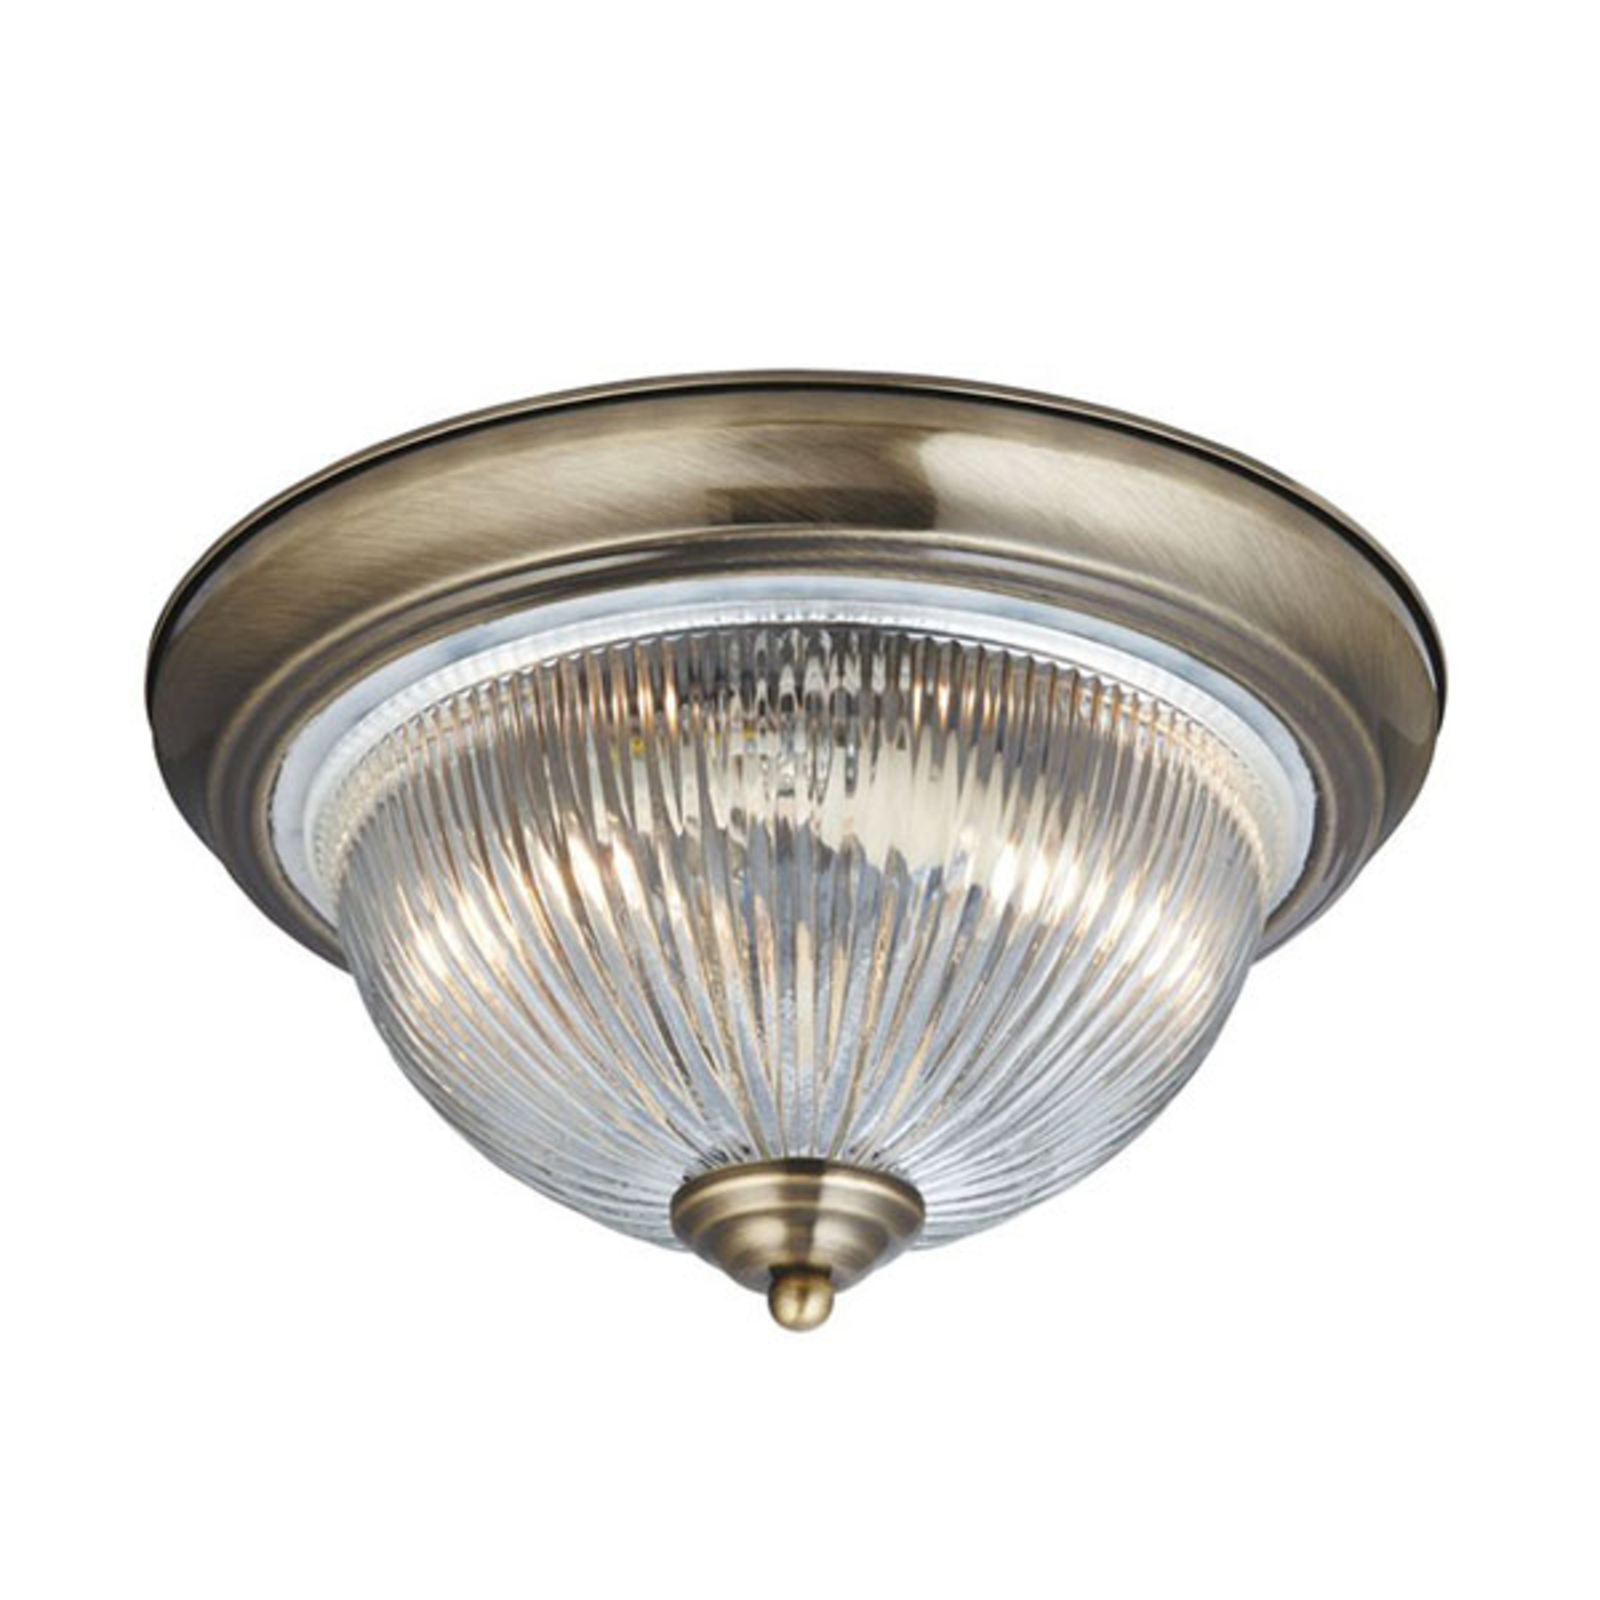 American Diner ceiling light IP44, antique brass